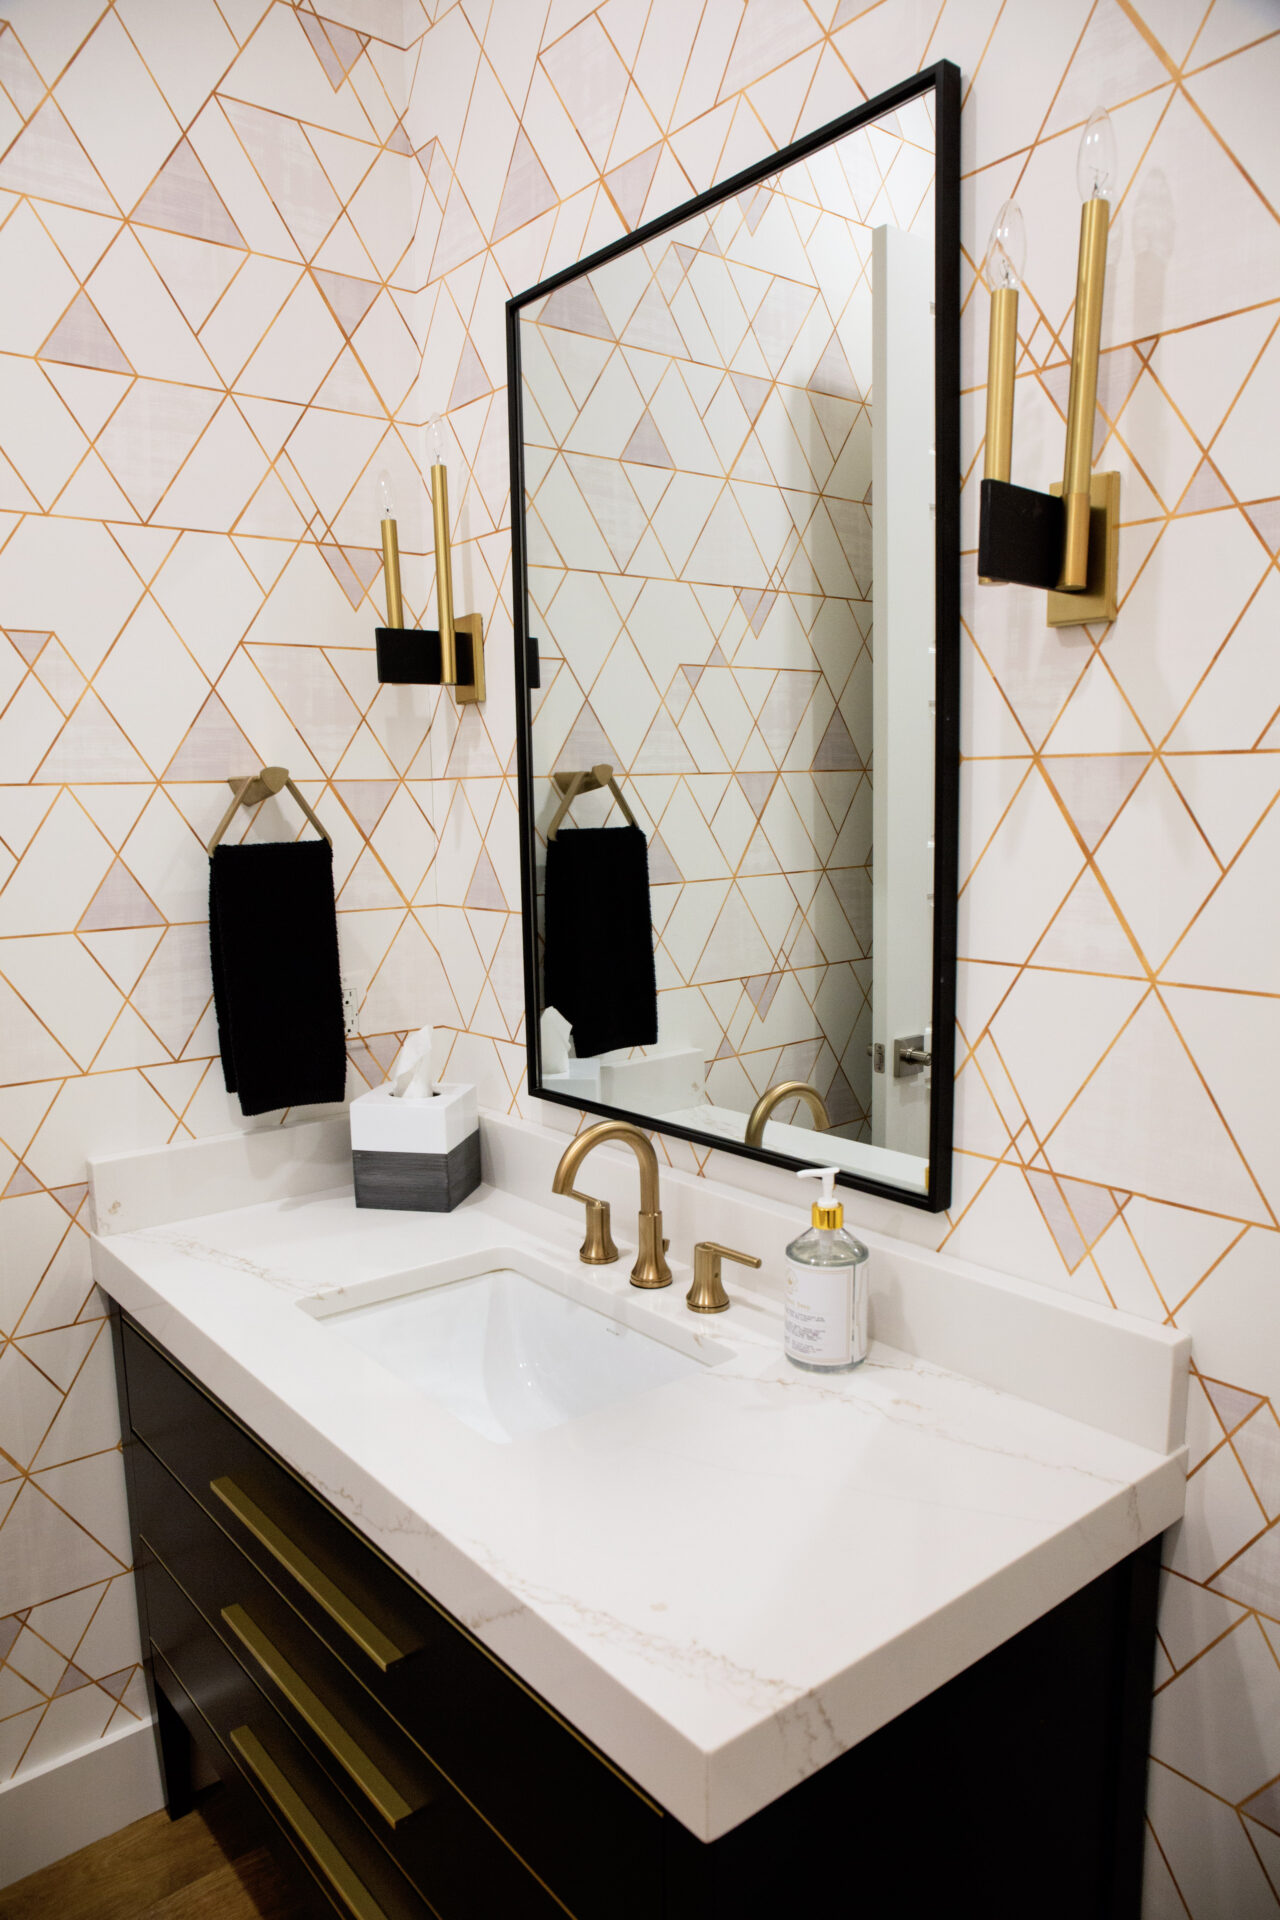 A clean bathroom sink and mirror